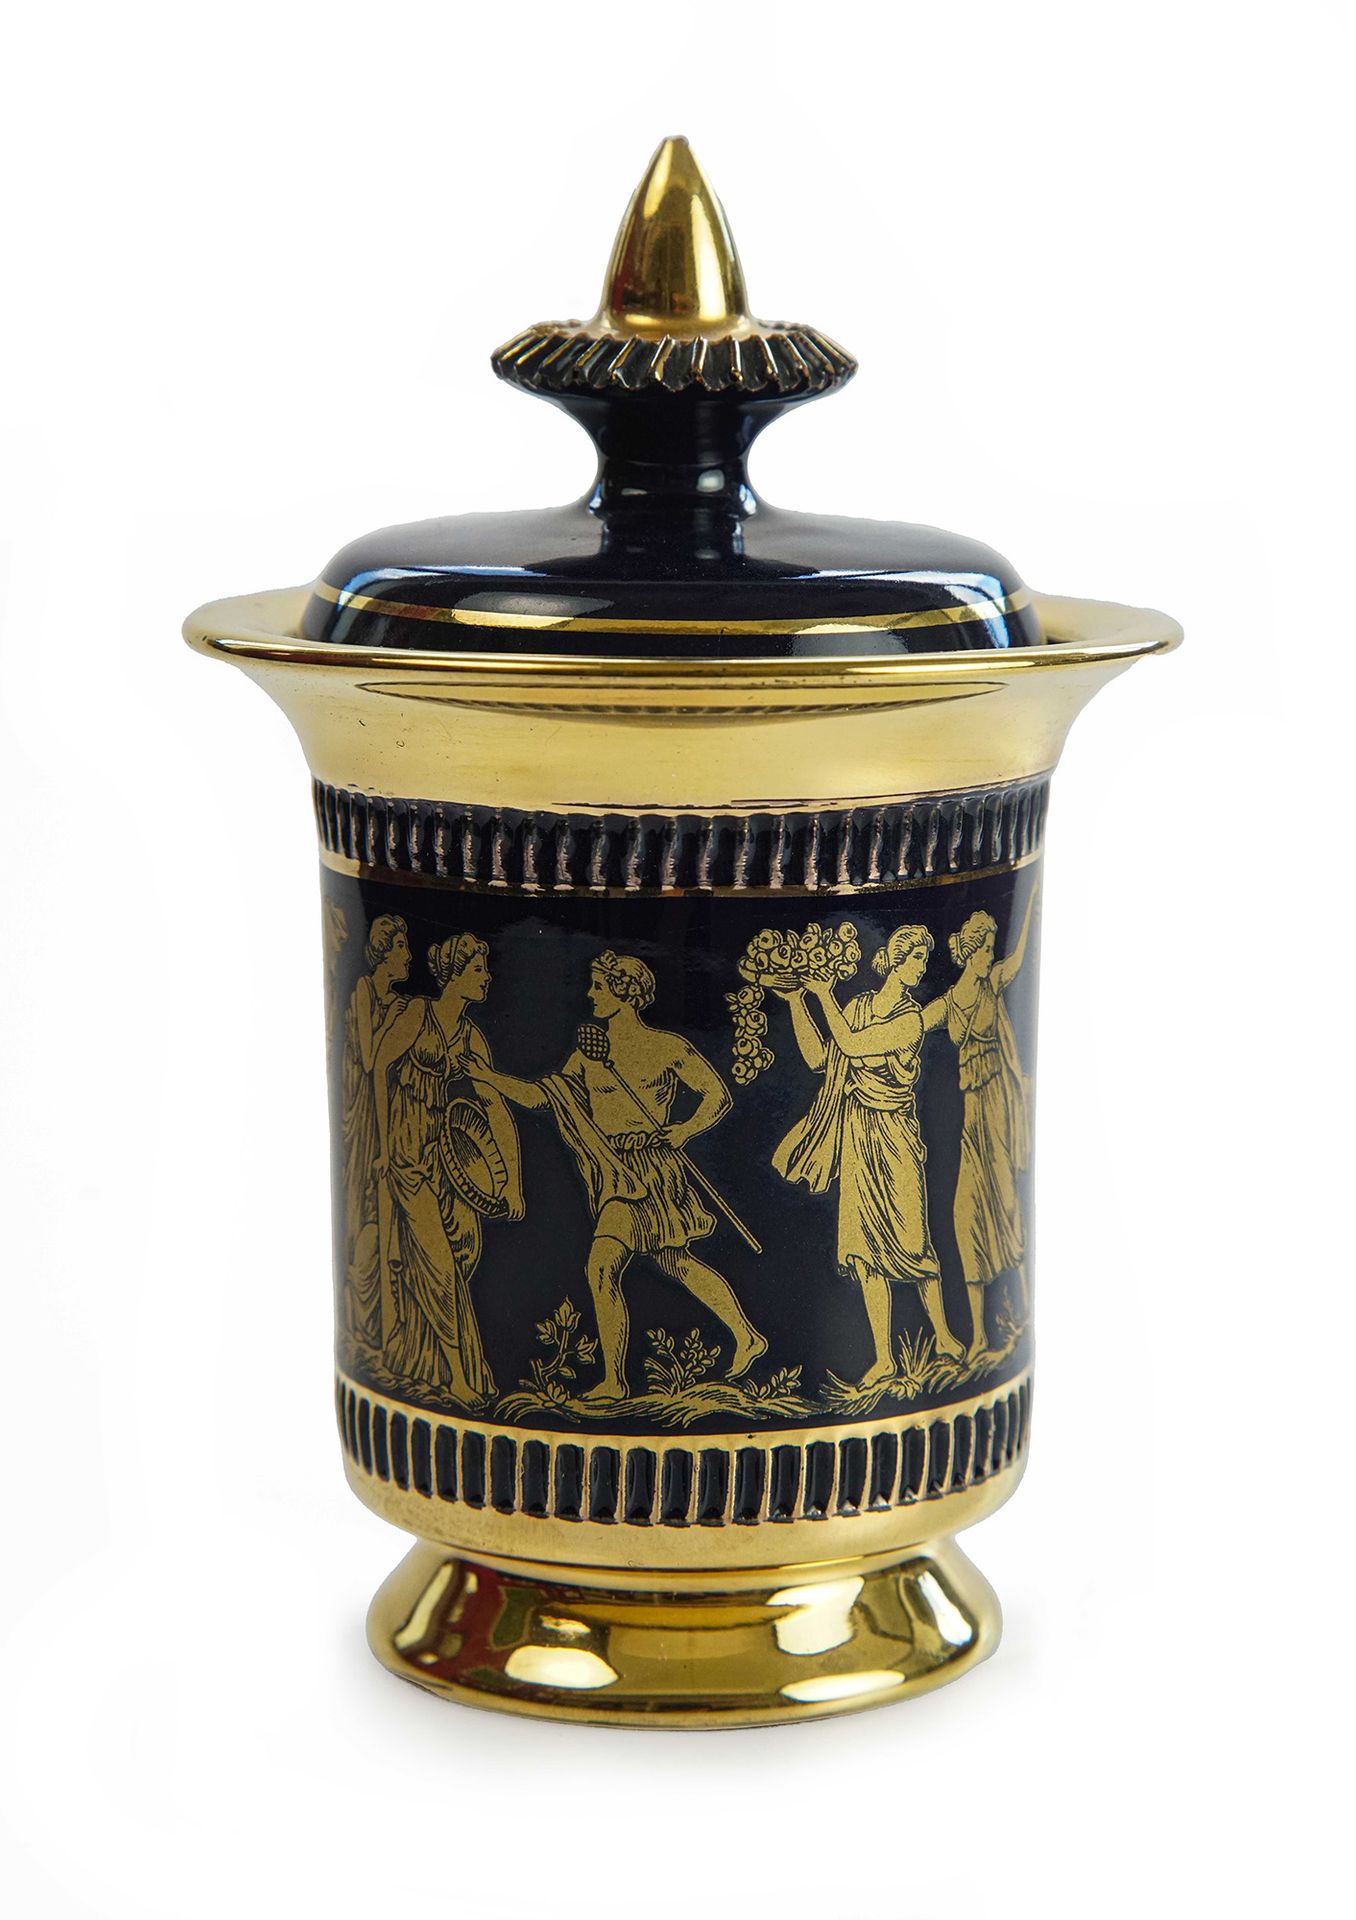 Null 蓝色的马乔利卡罐子

用金箔装饰的古典主题

h cm 15